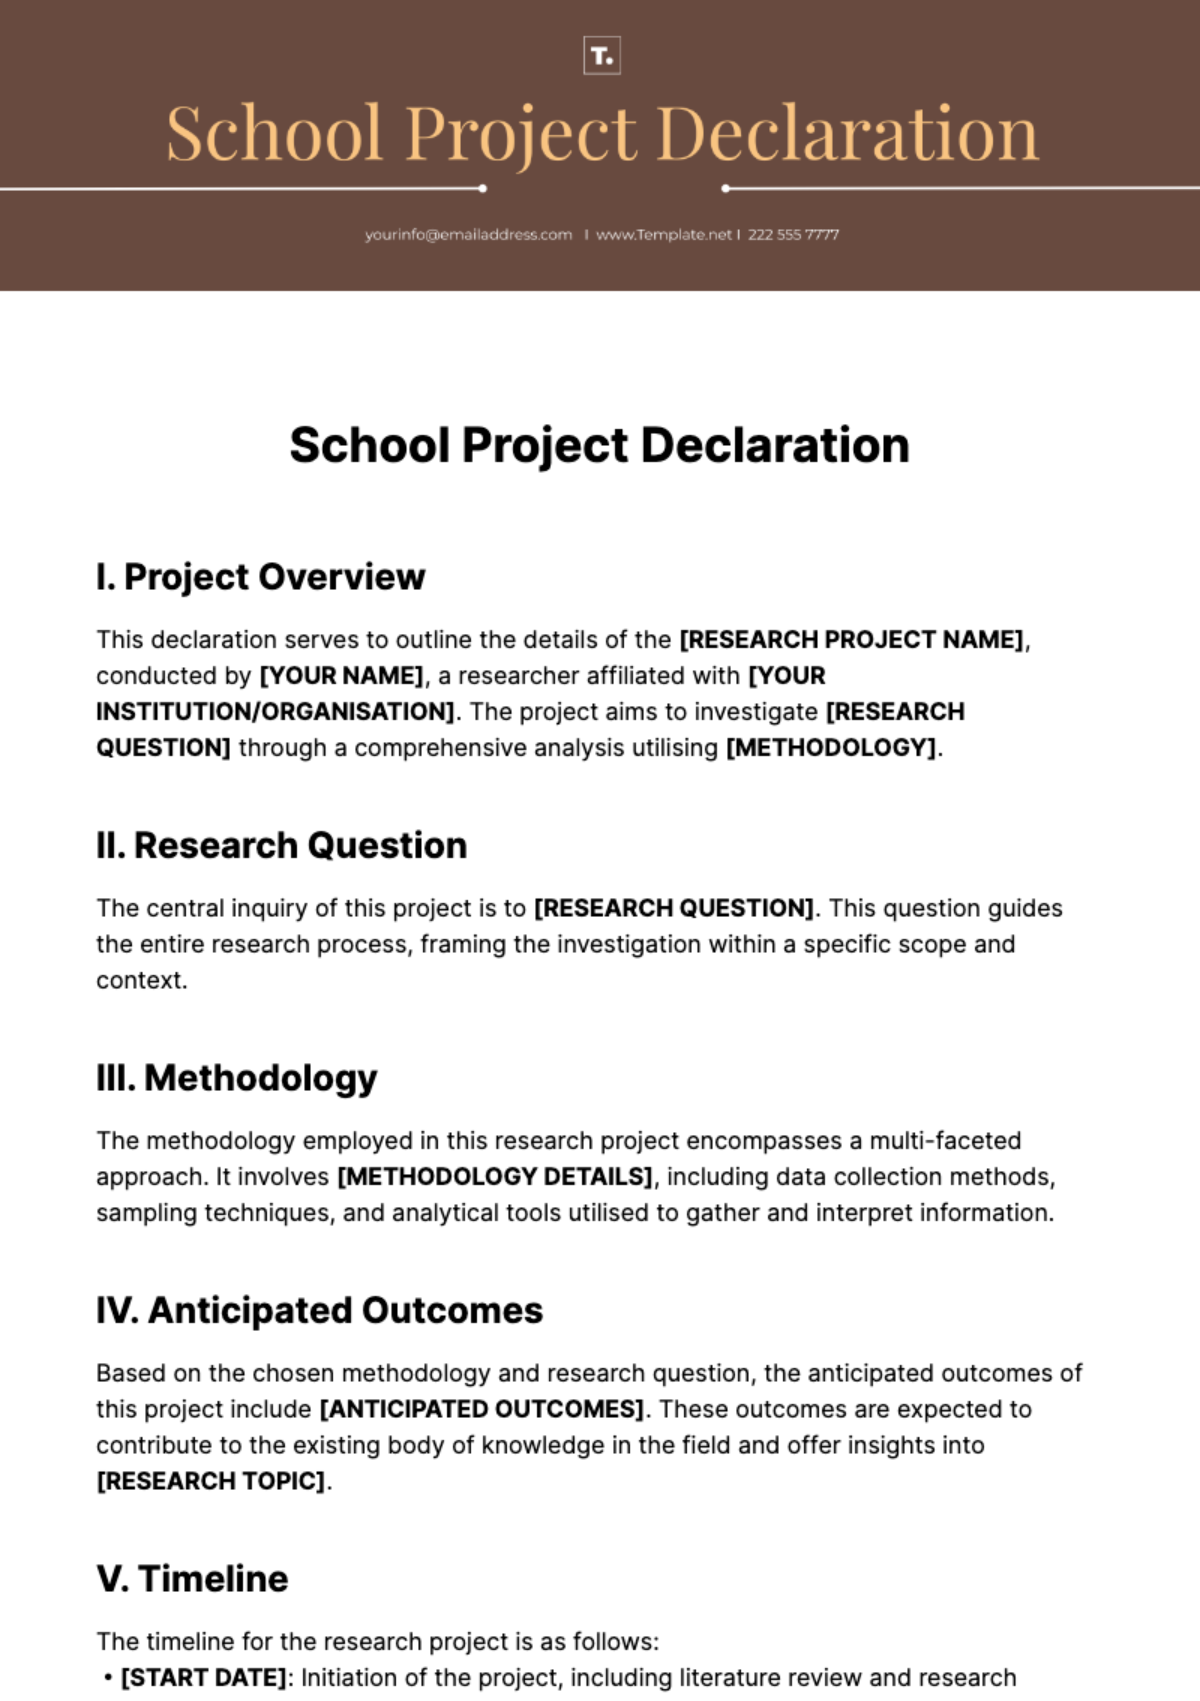 School Project Declaration Template